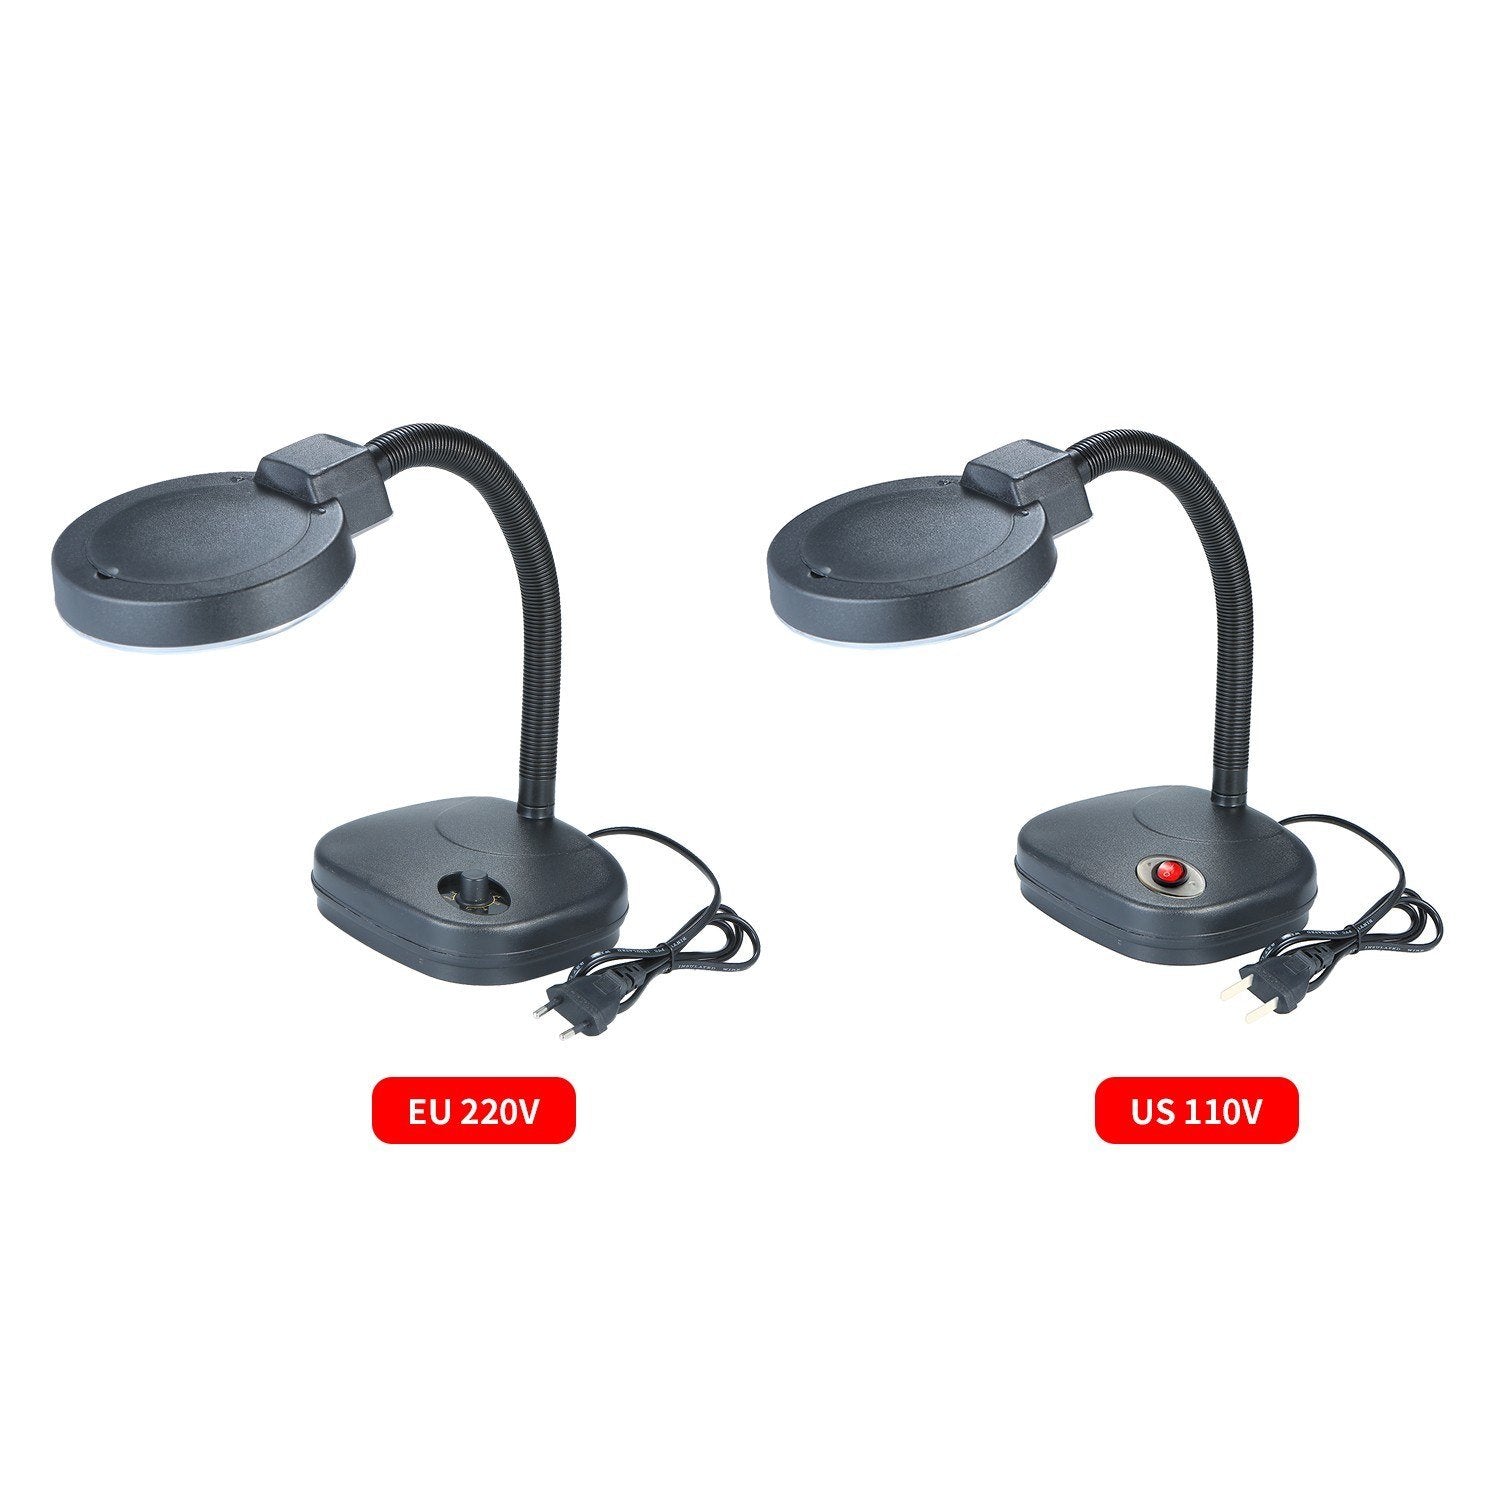 Bench Magnifier 10x/5x 3/8 Diopter Flexible Gooseneck LED Table Desktop Magnifying Glass Lamp